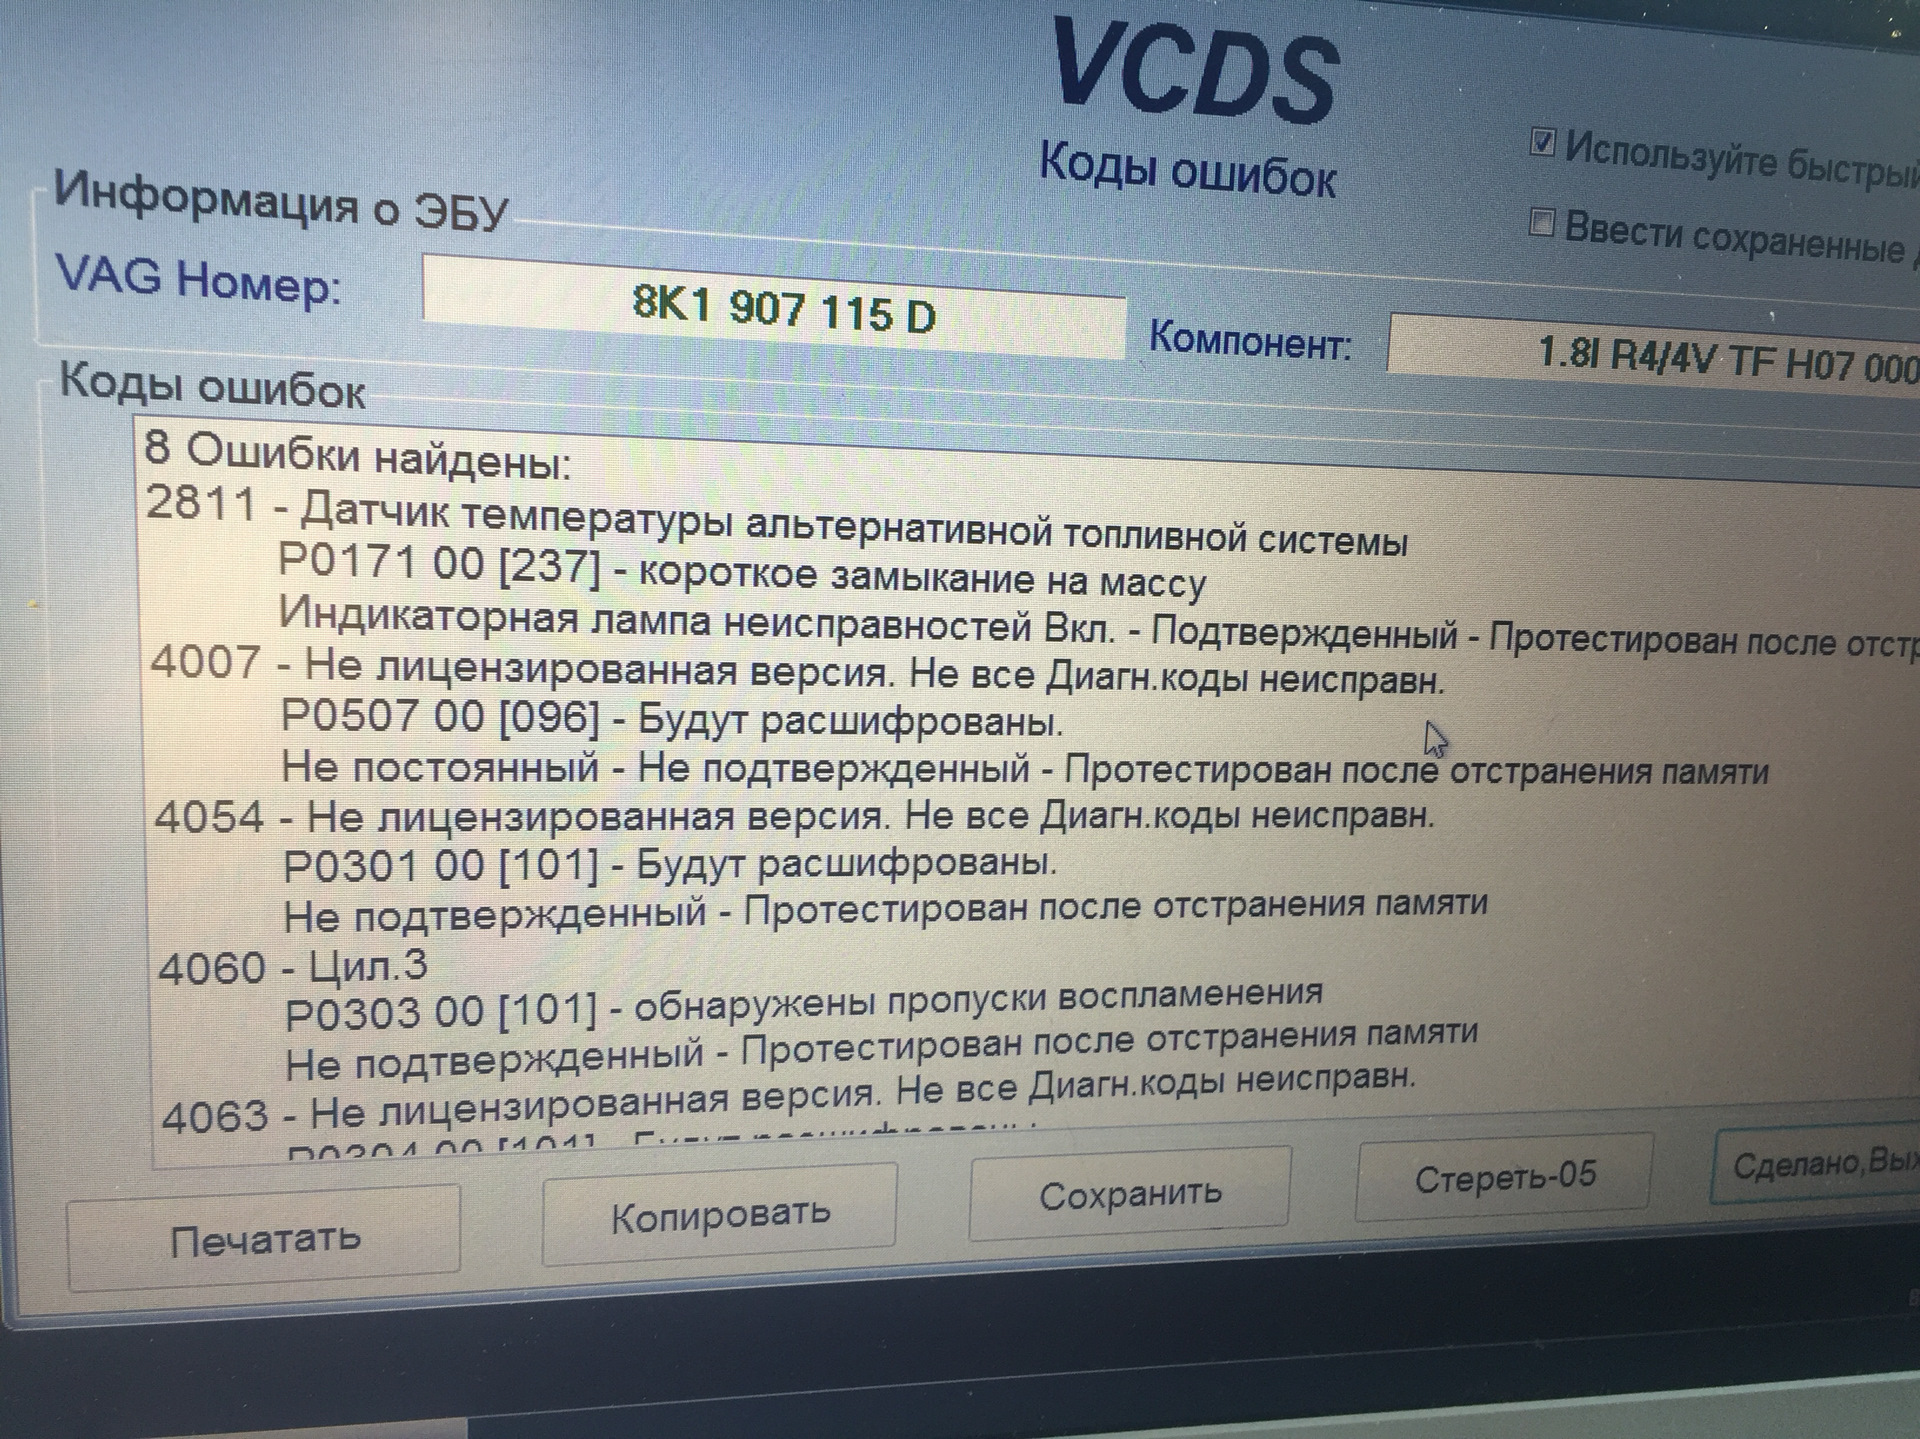 Ошибка п 0 5 0 5. VAG коды ошибок. Ошибки VCDS. Коды ошибок на Jack a4. Ошибка ЭБУ 7е8.